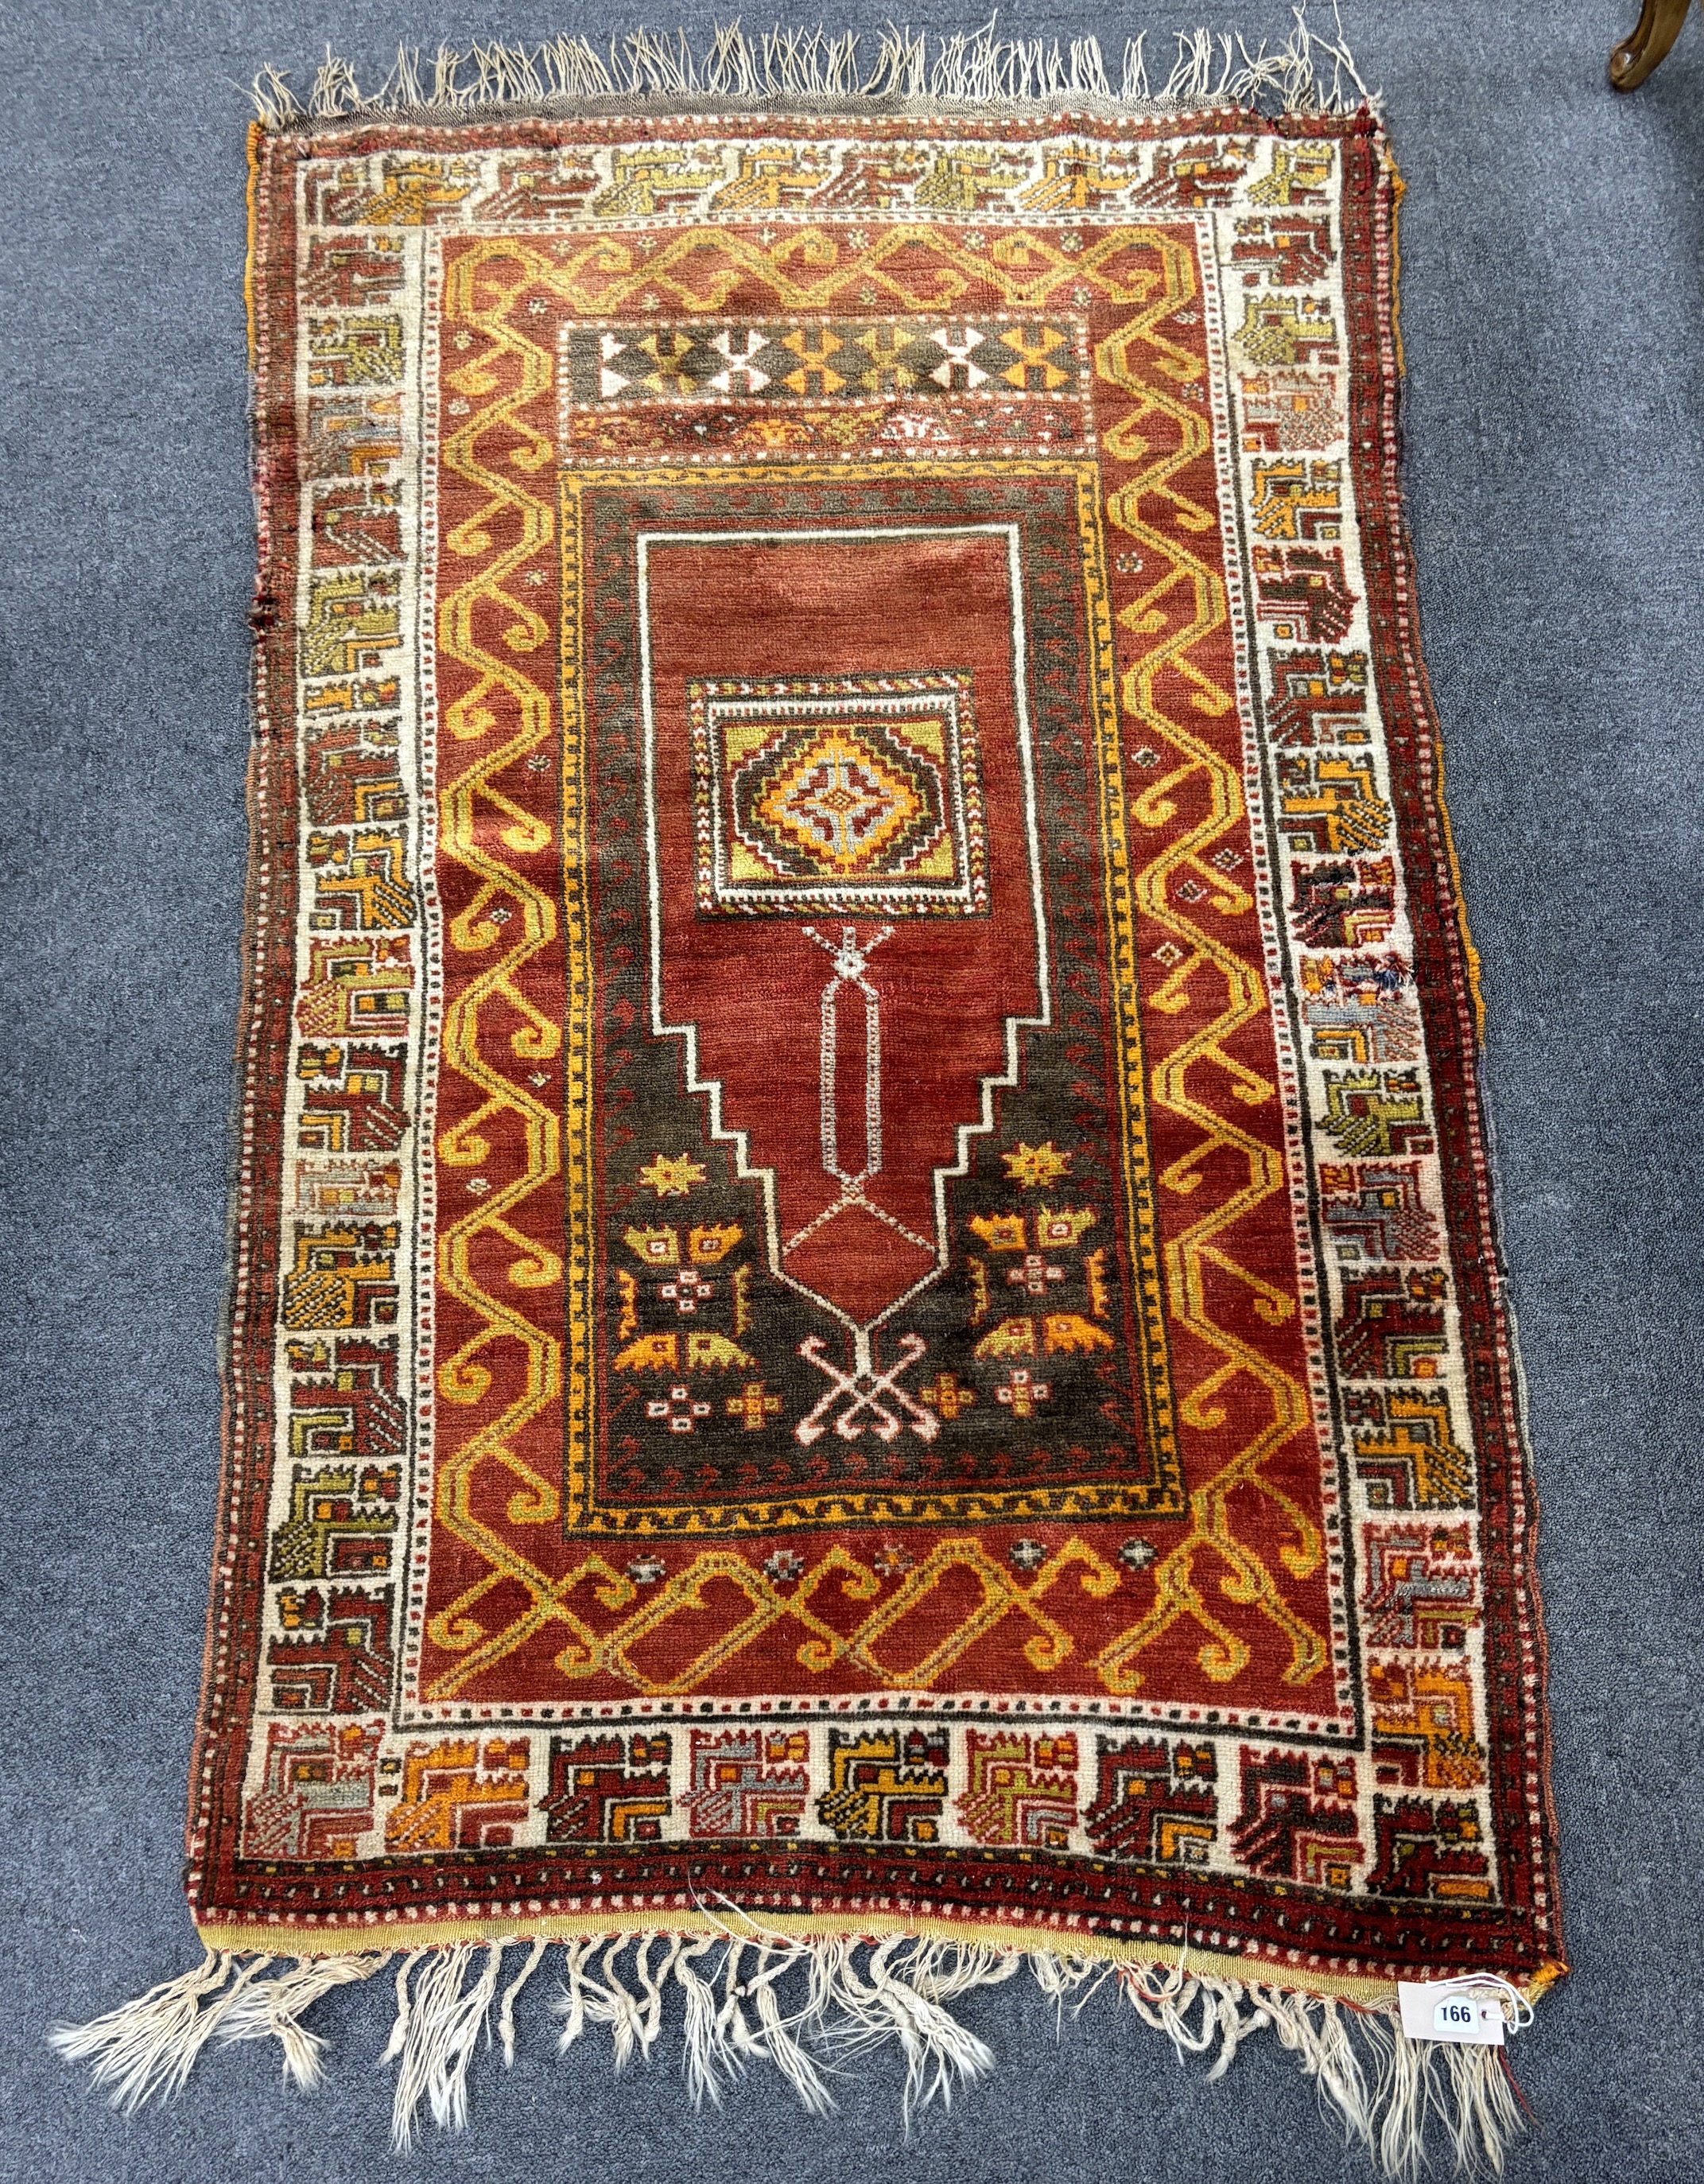 A Turkish prayer rug, 154 x 96cm